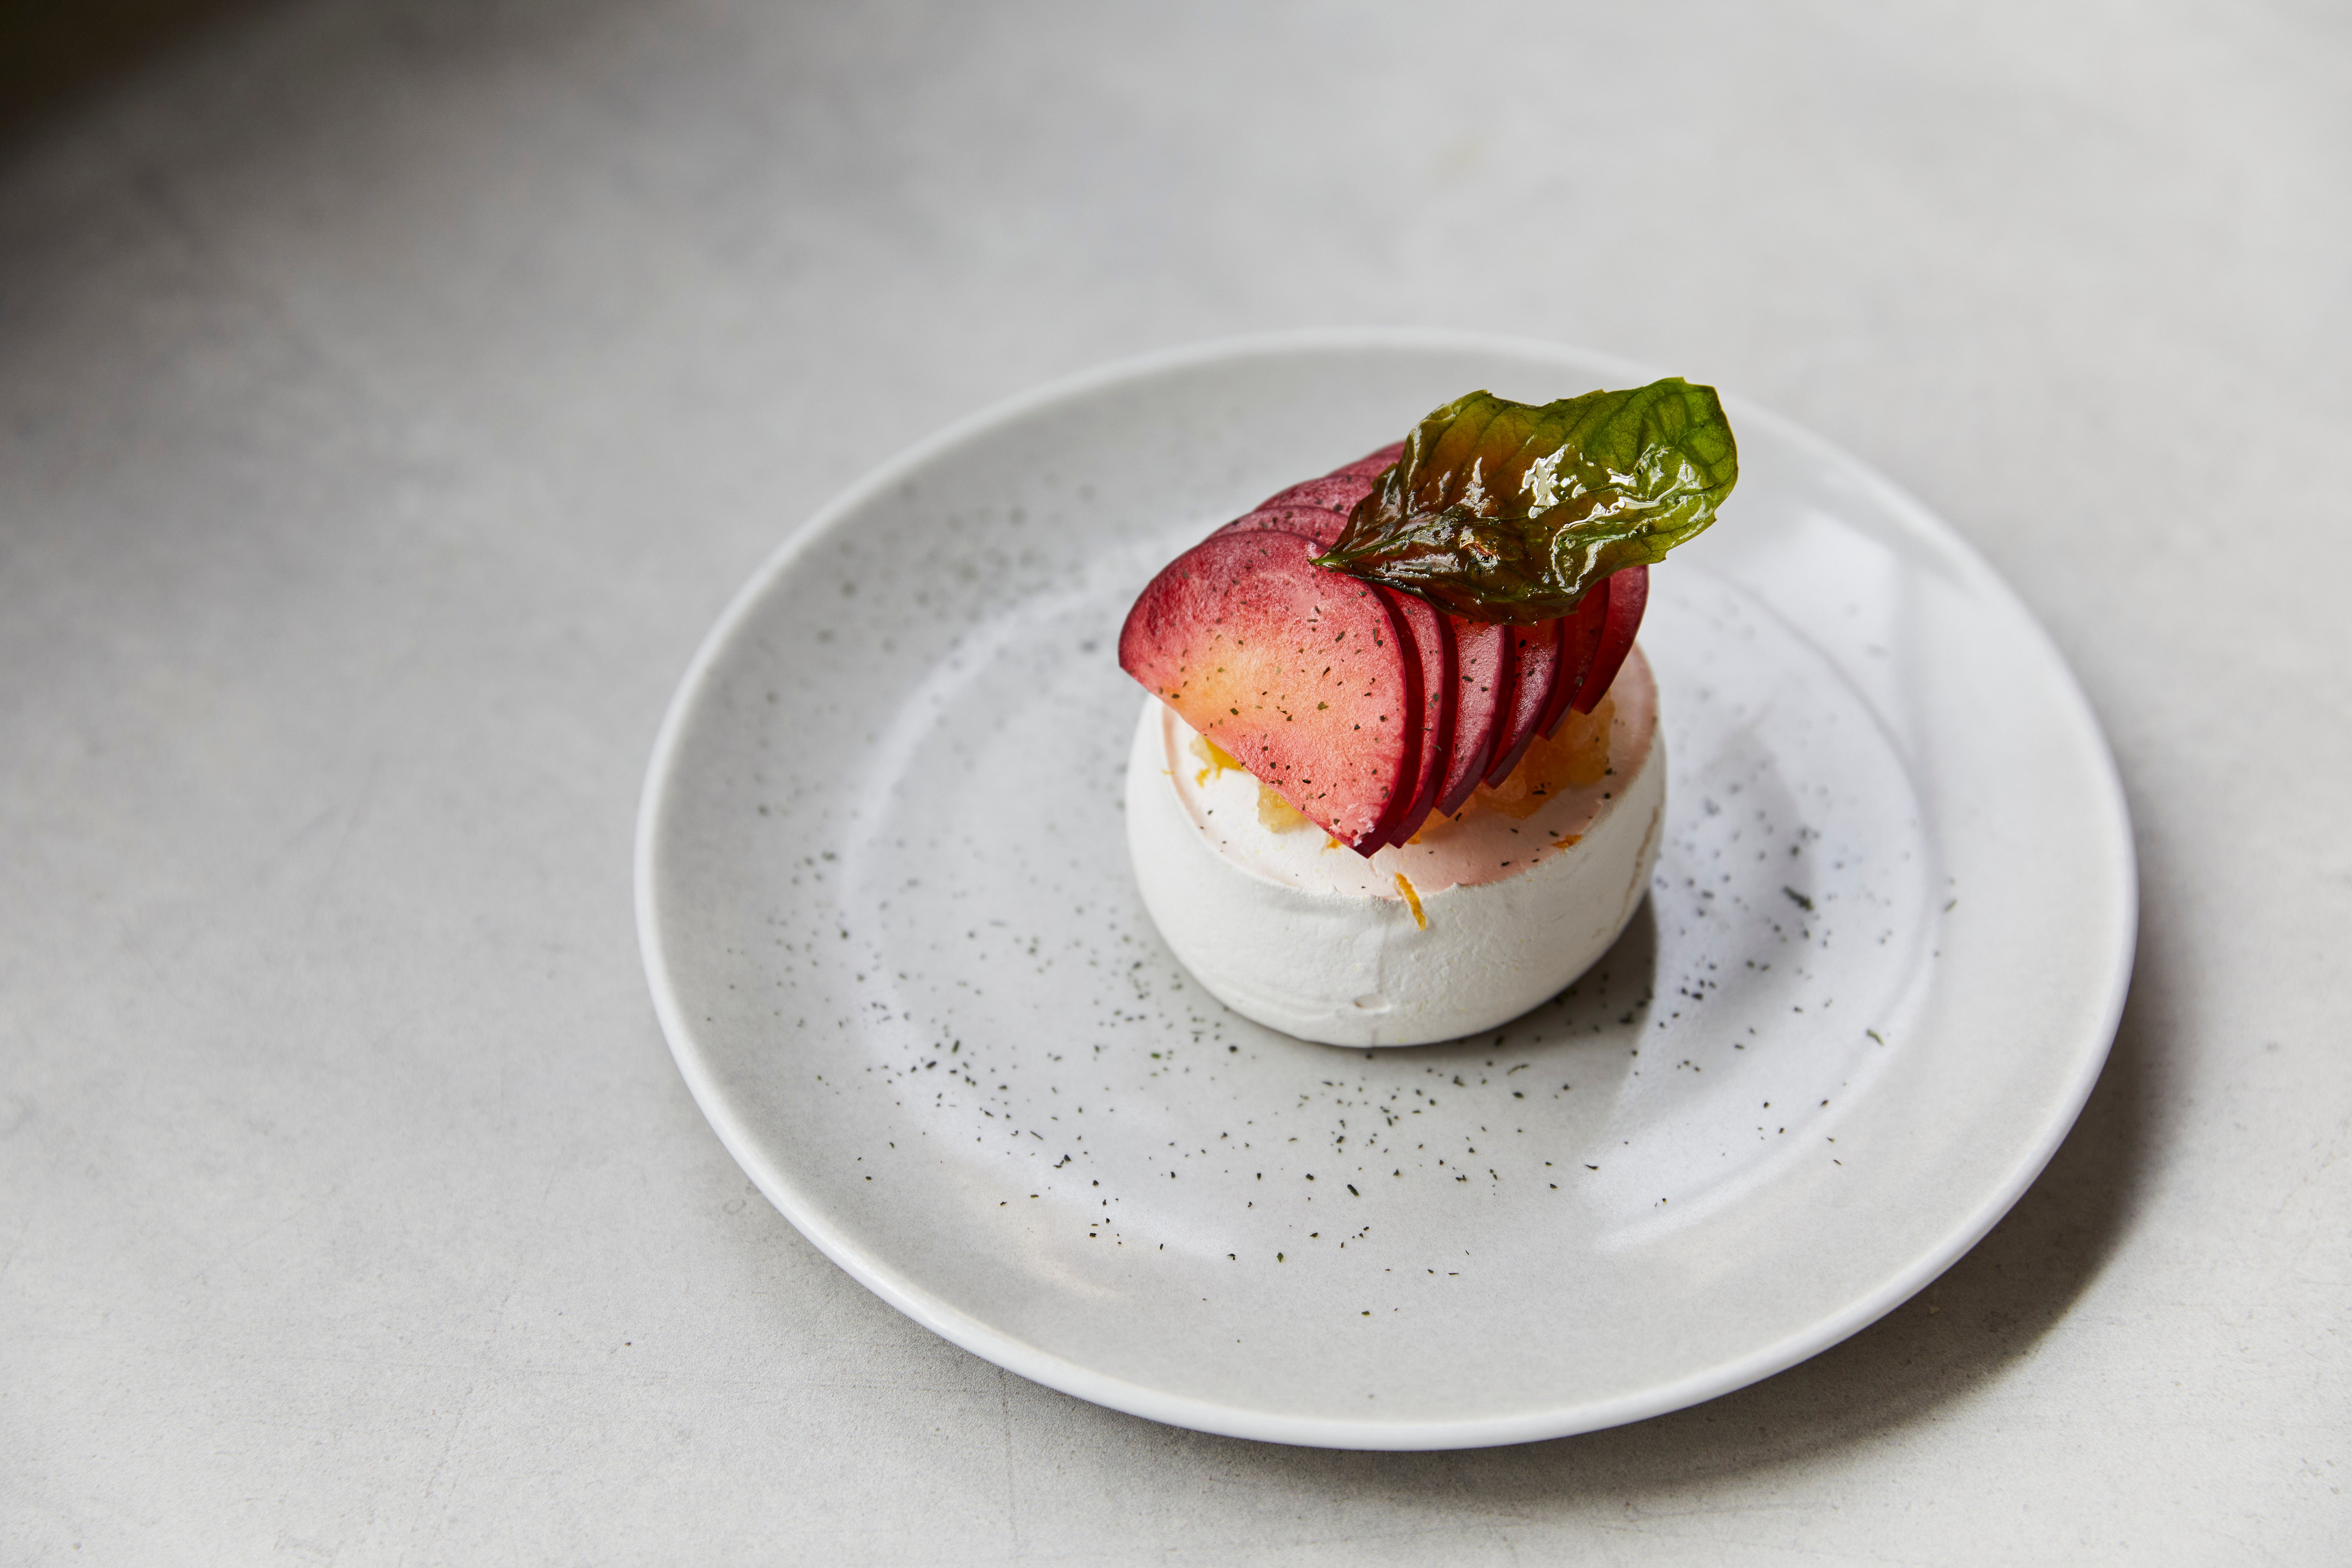 A single fried basil leaf transforms this light dessert